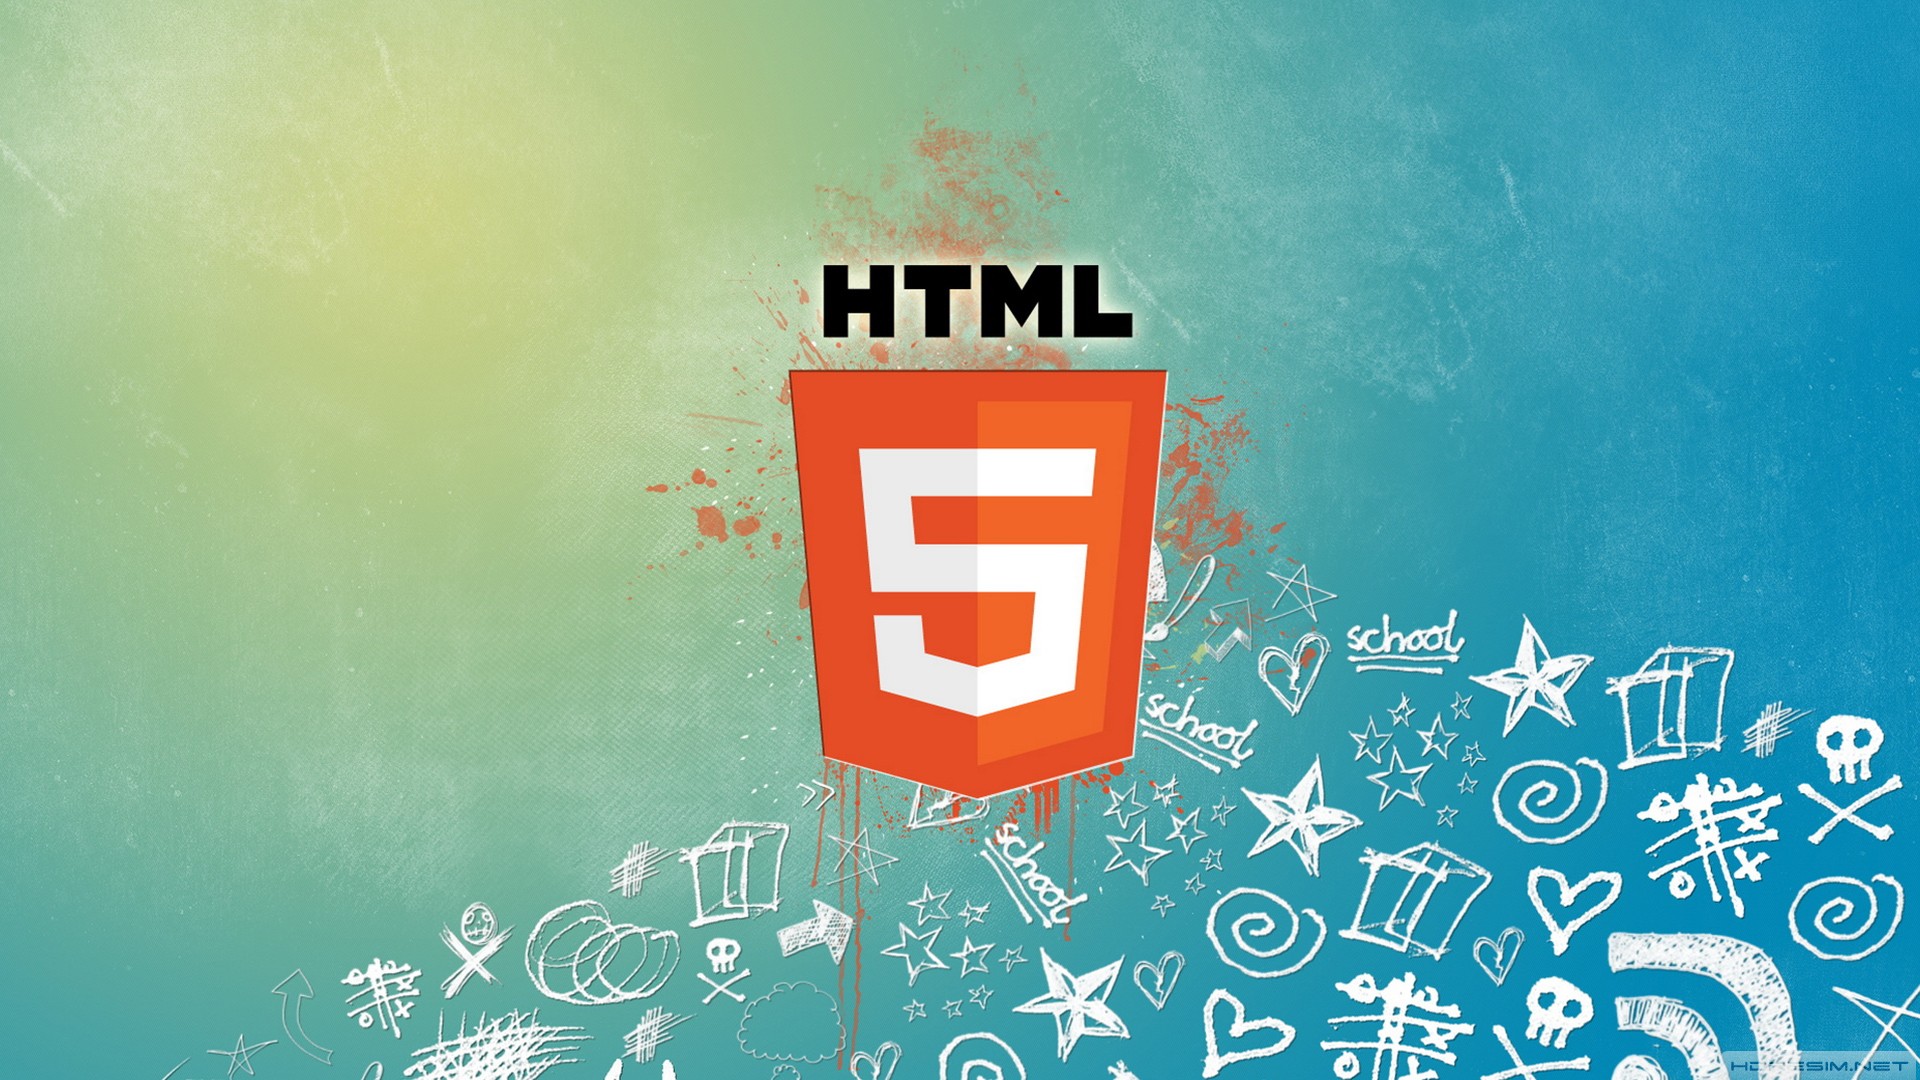 html 5,web,soyut